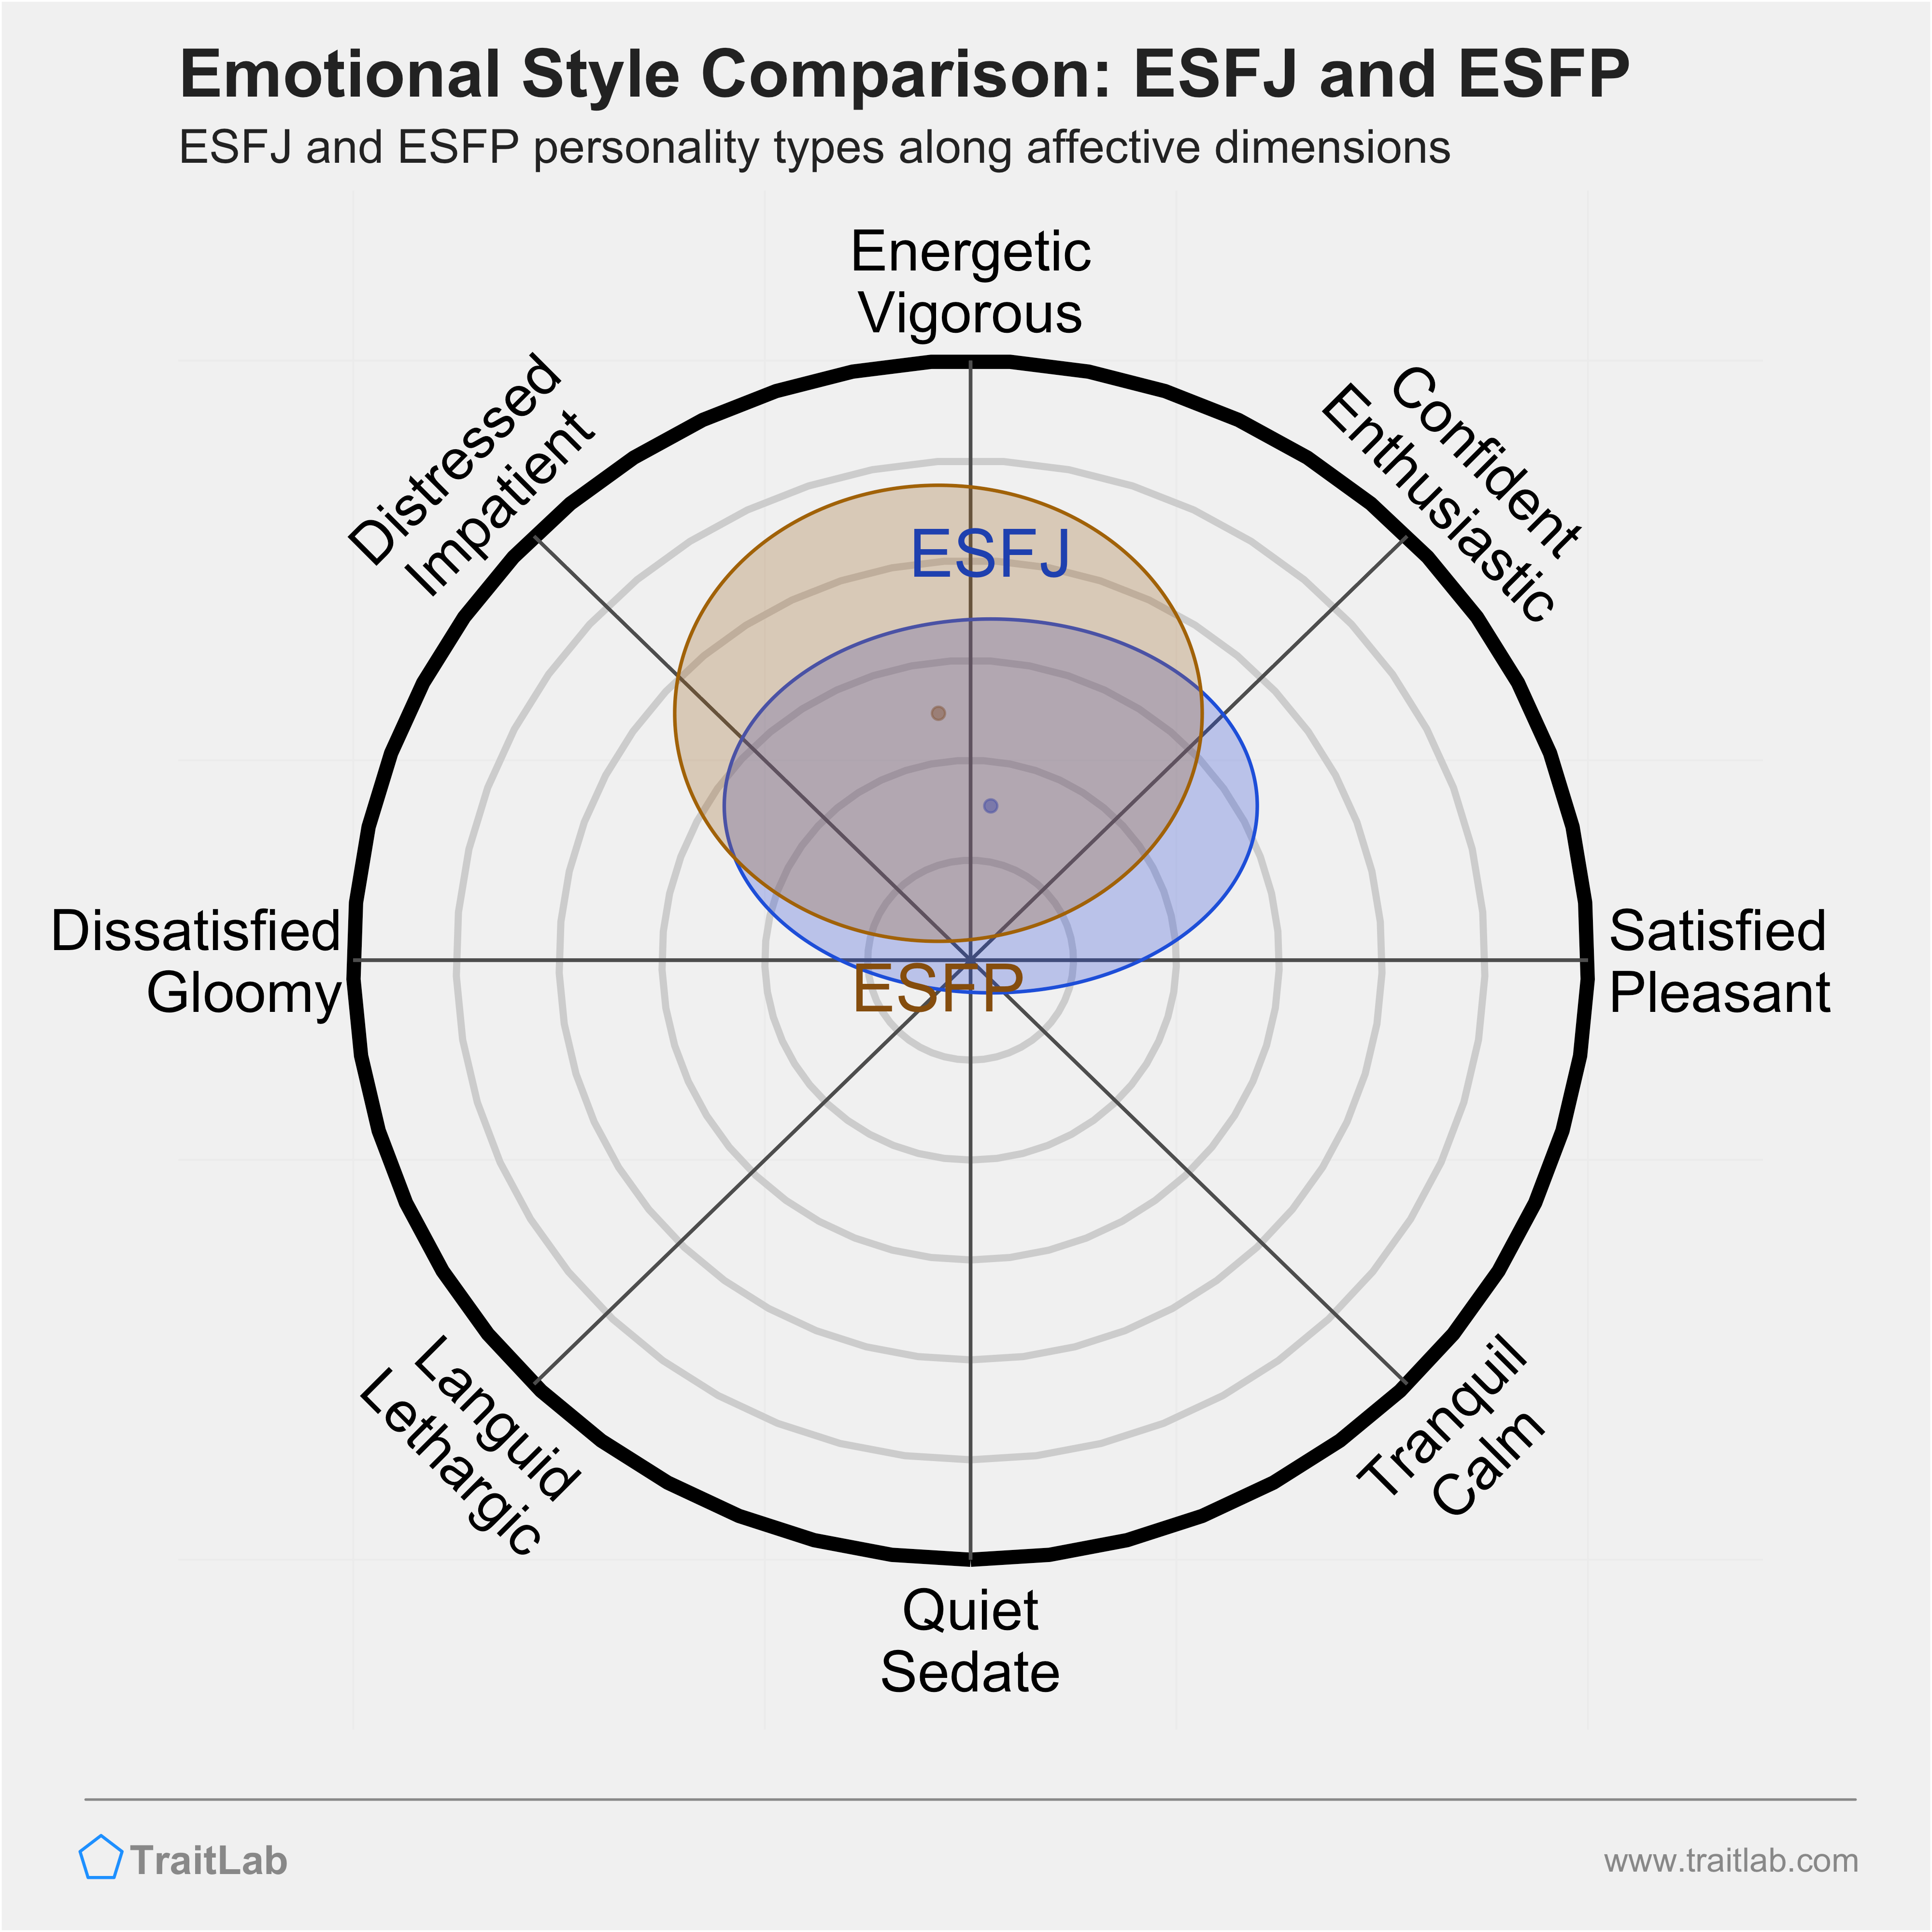 ESFJ and ESFP comparison across emotional (affective) dimensions